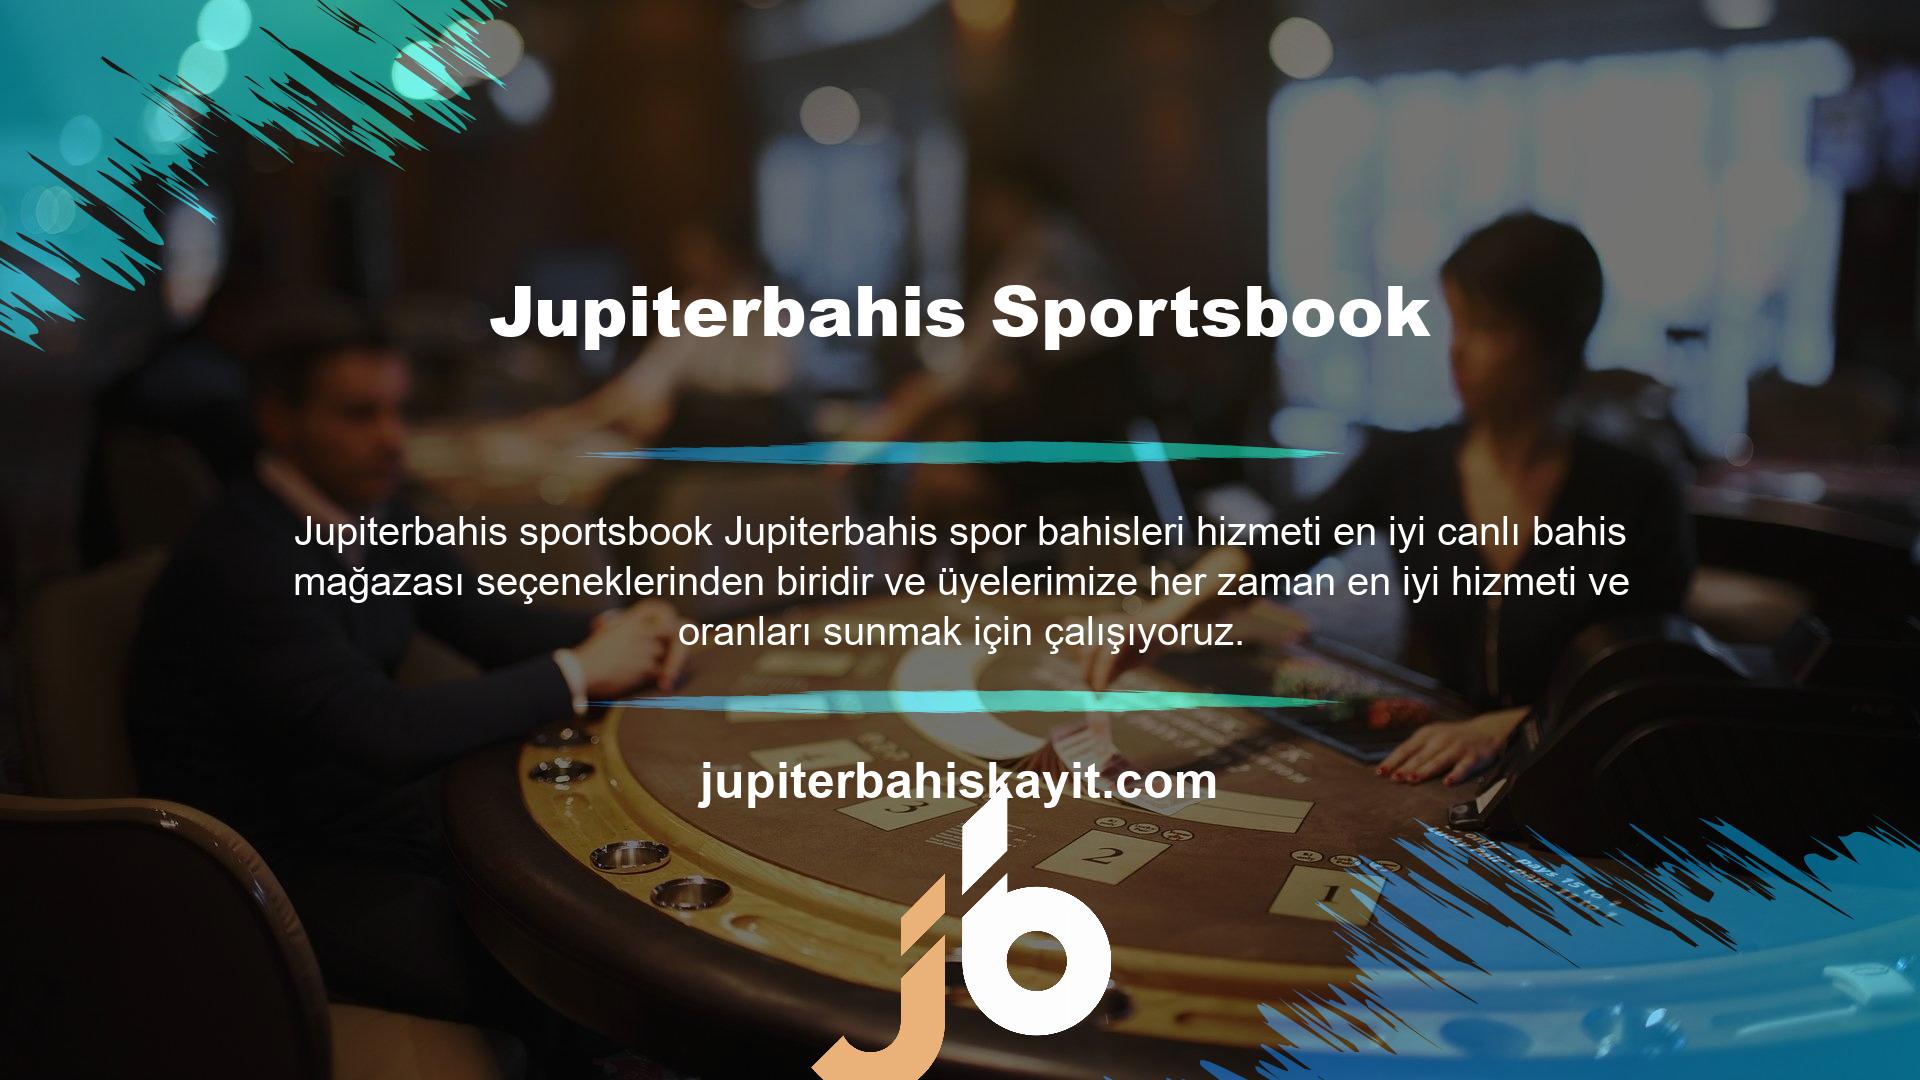 Jupiterbahis Sportsbook